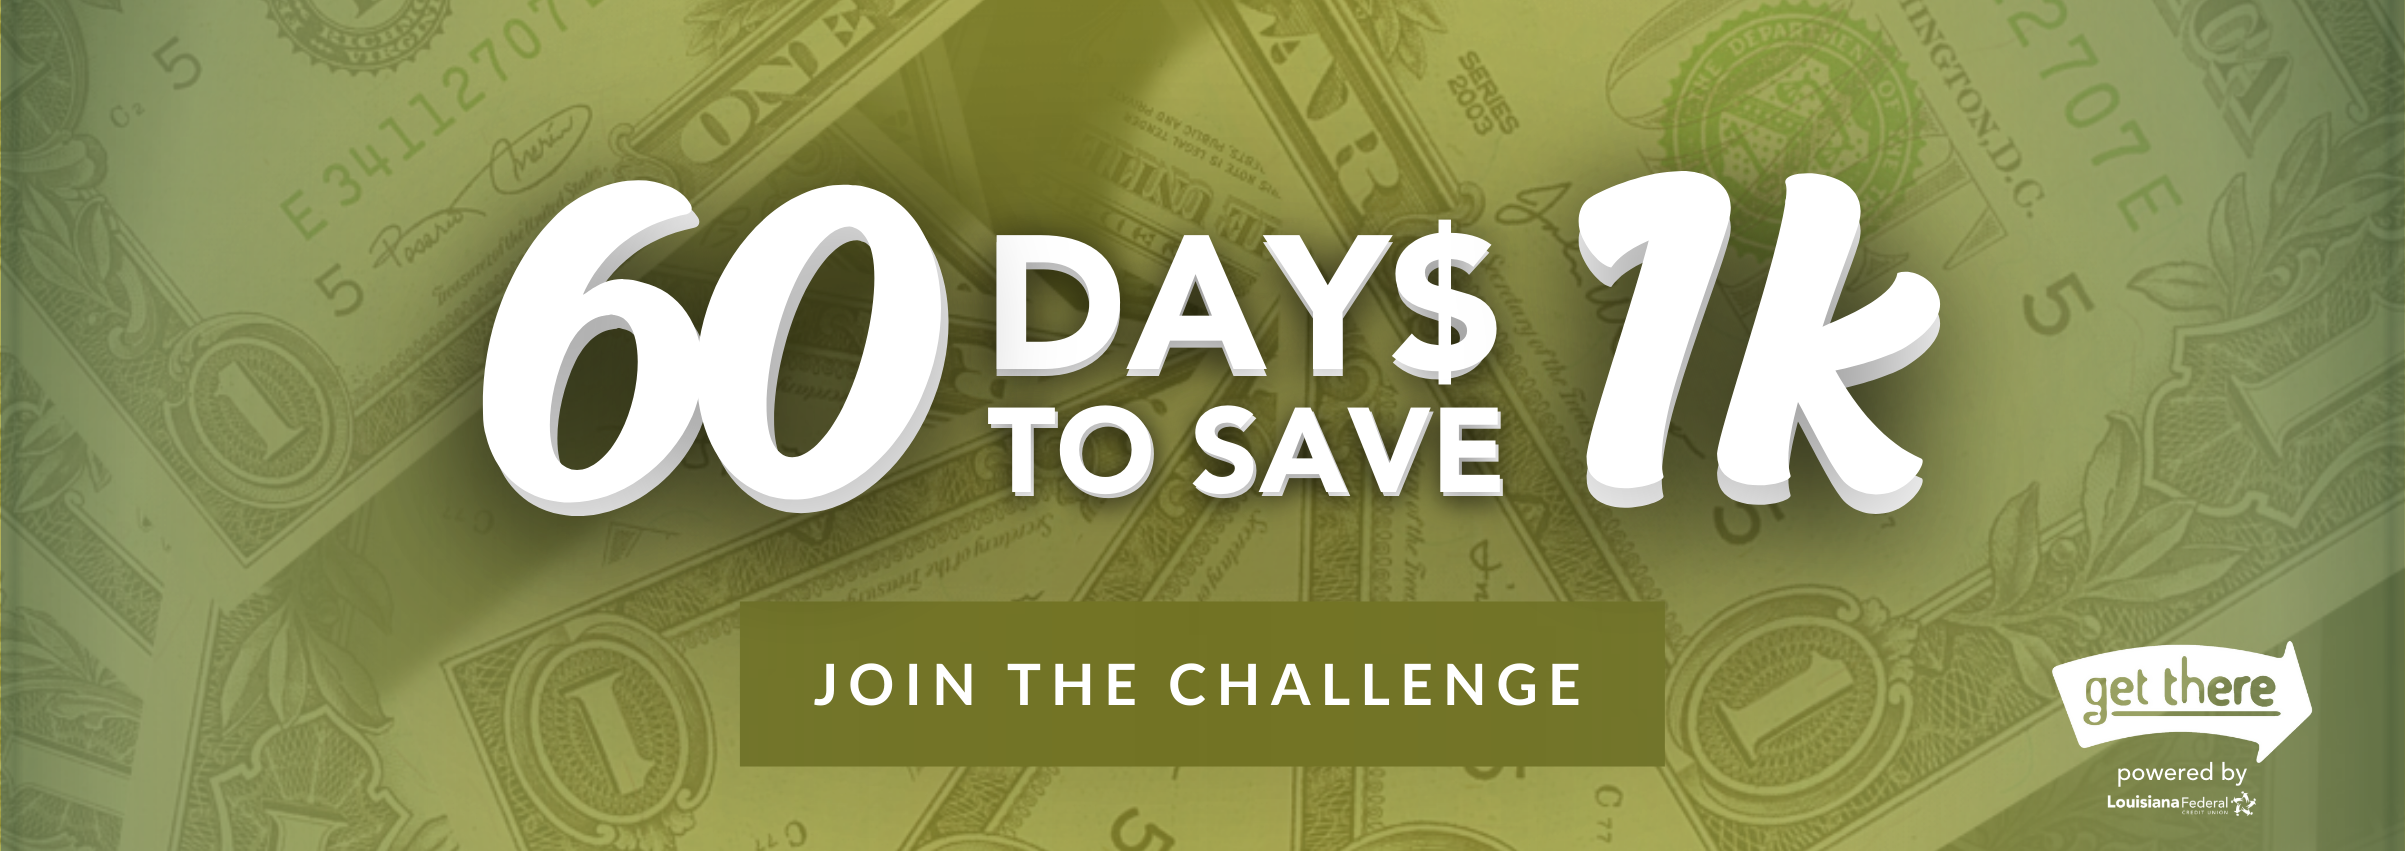 Banner 60 days to save 1k challenge (1)